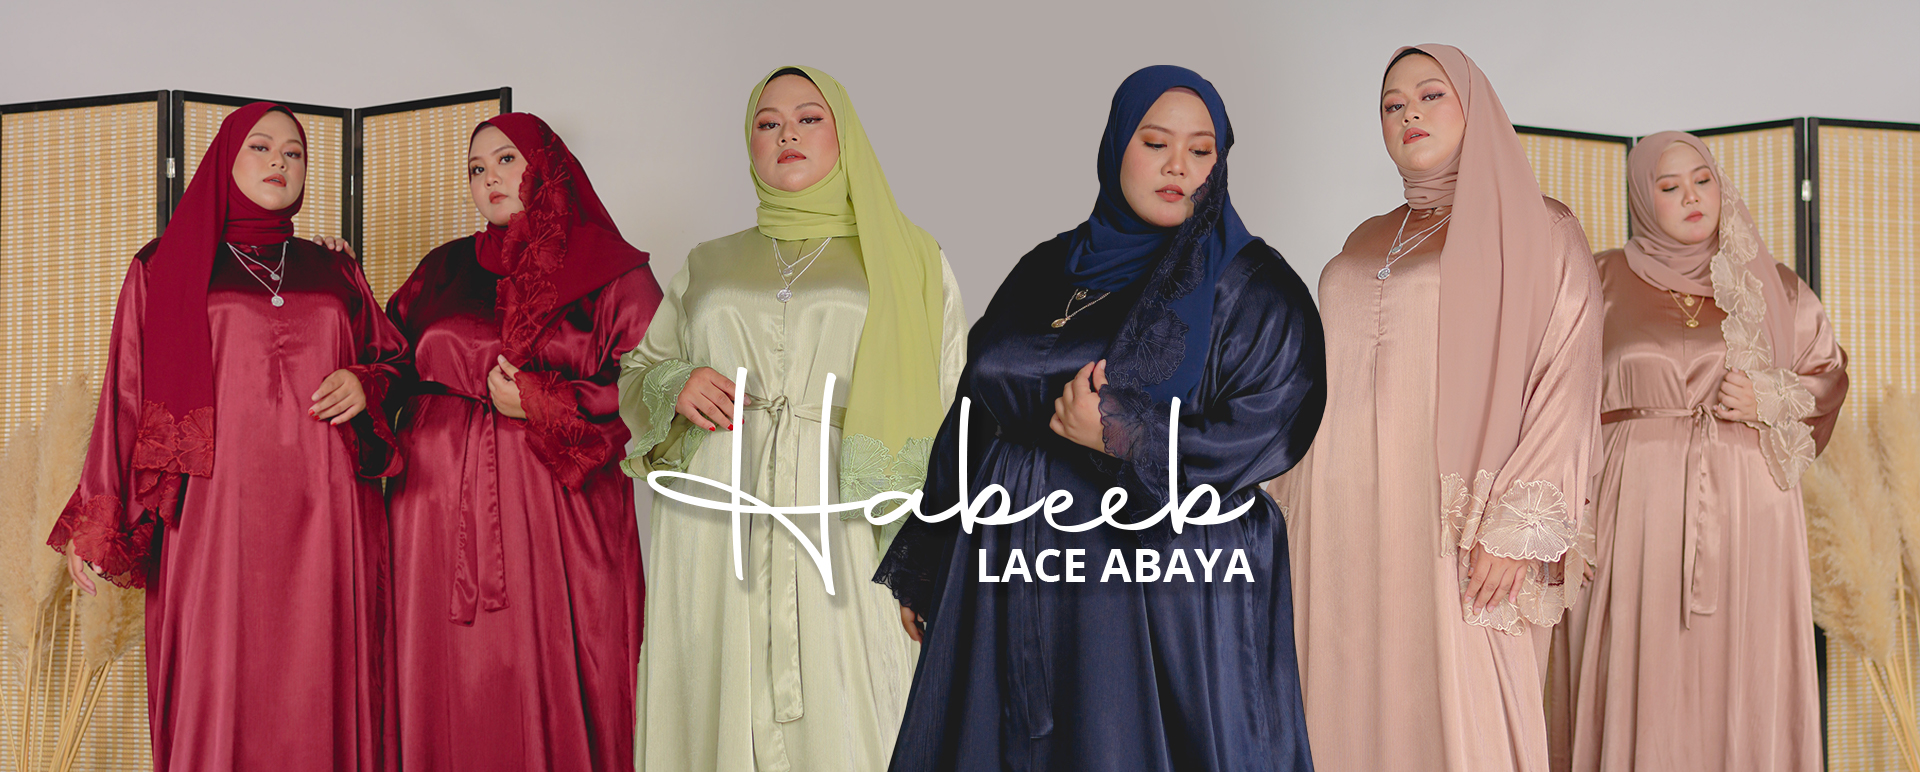 Habeeb Lace Abaya